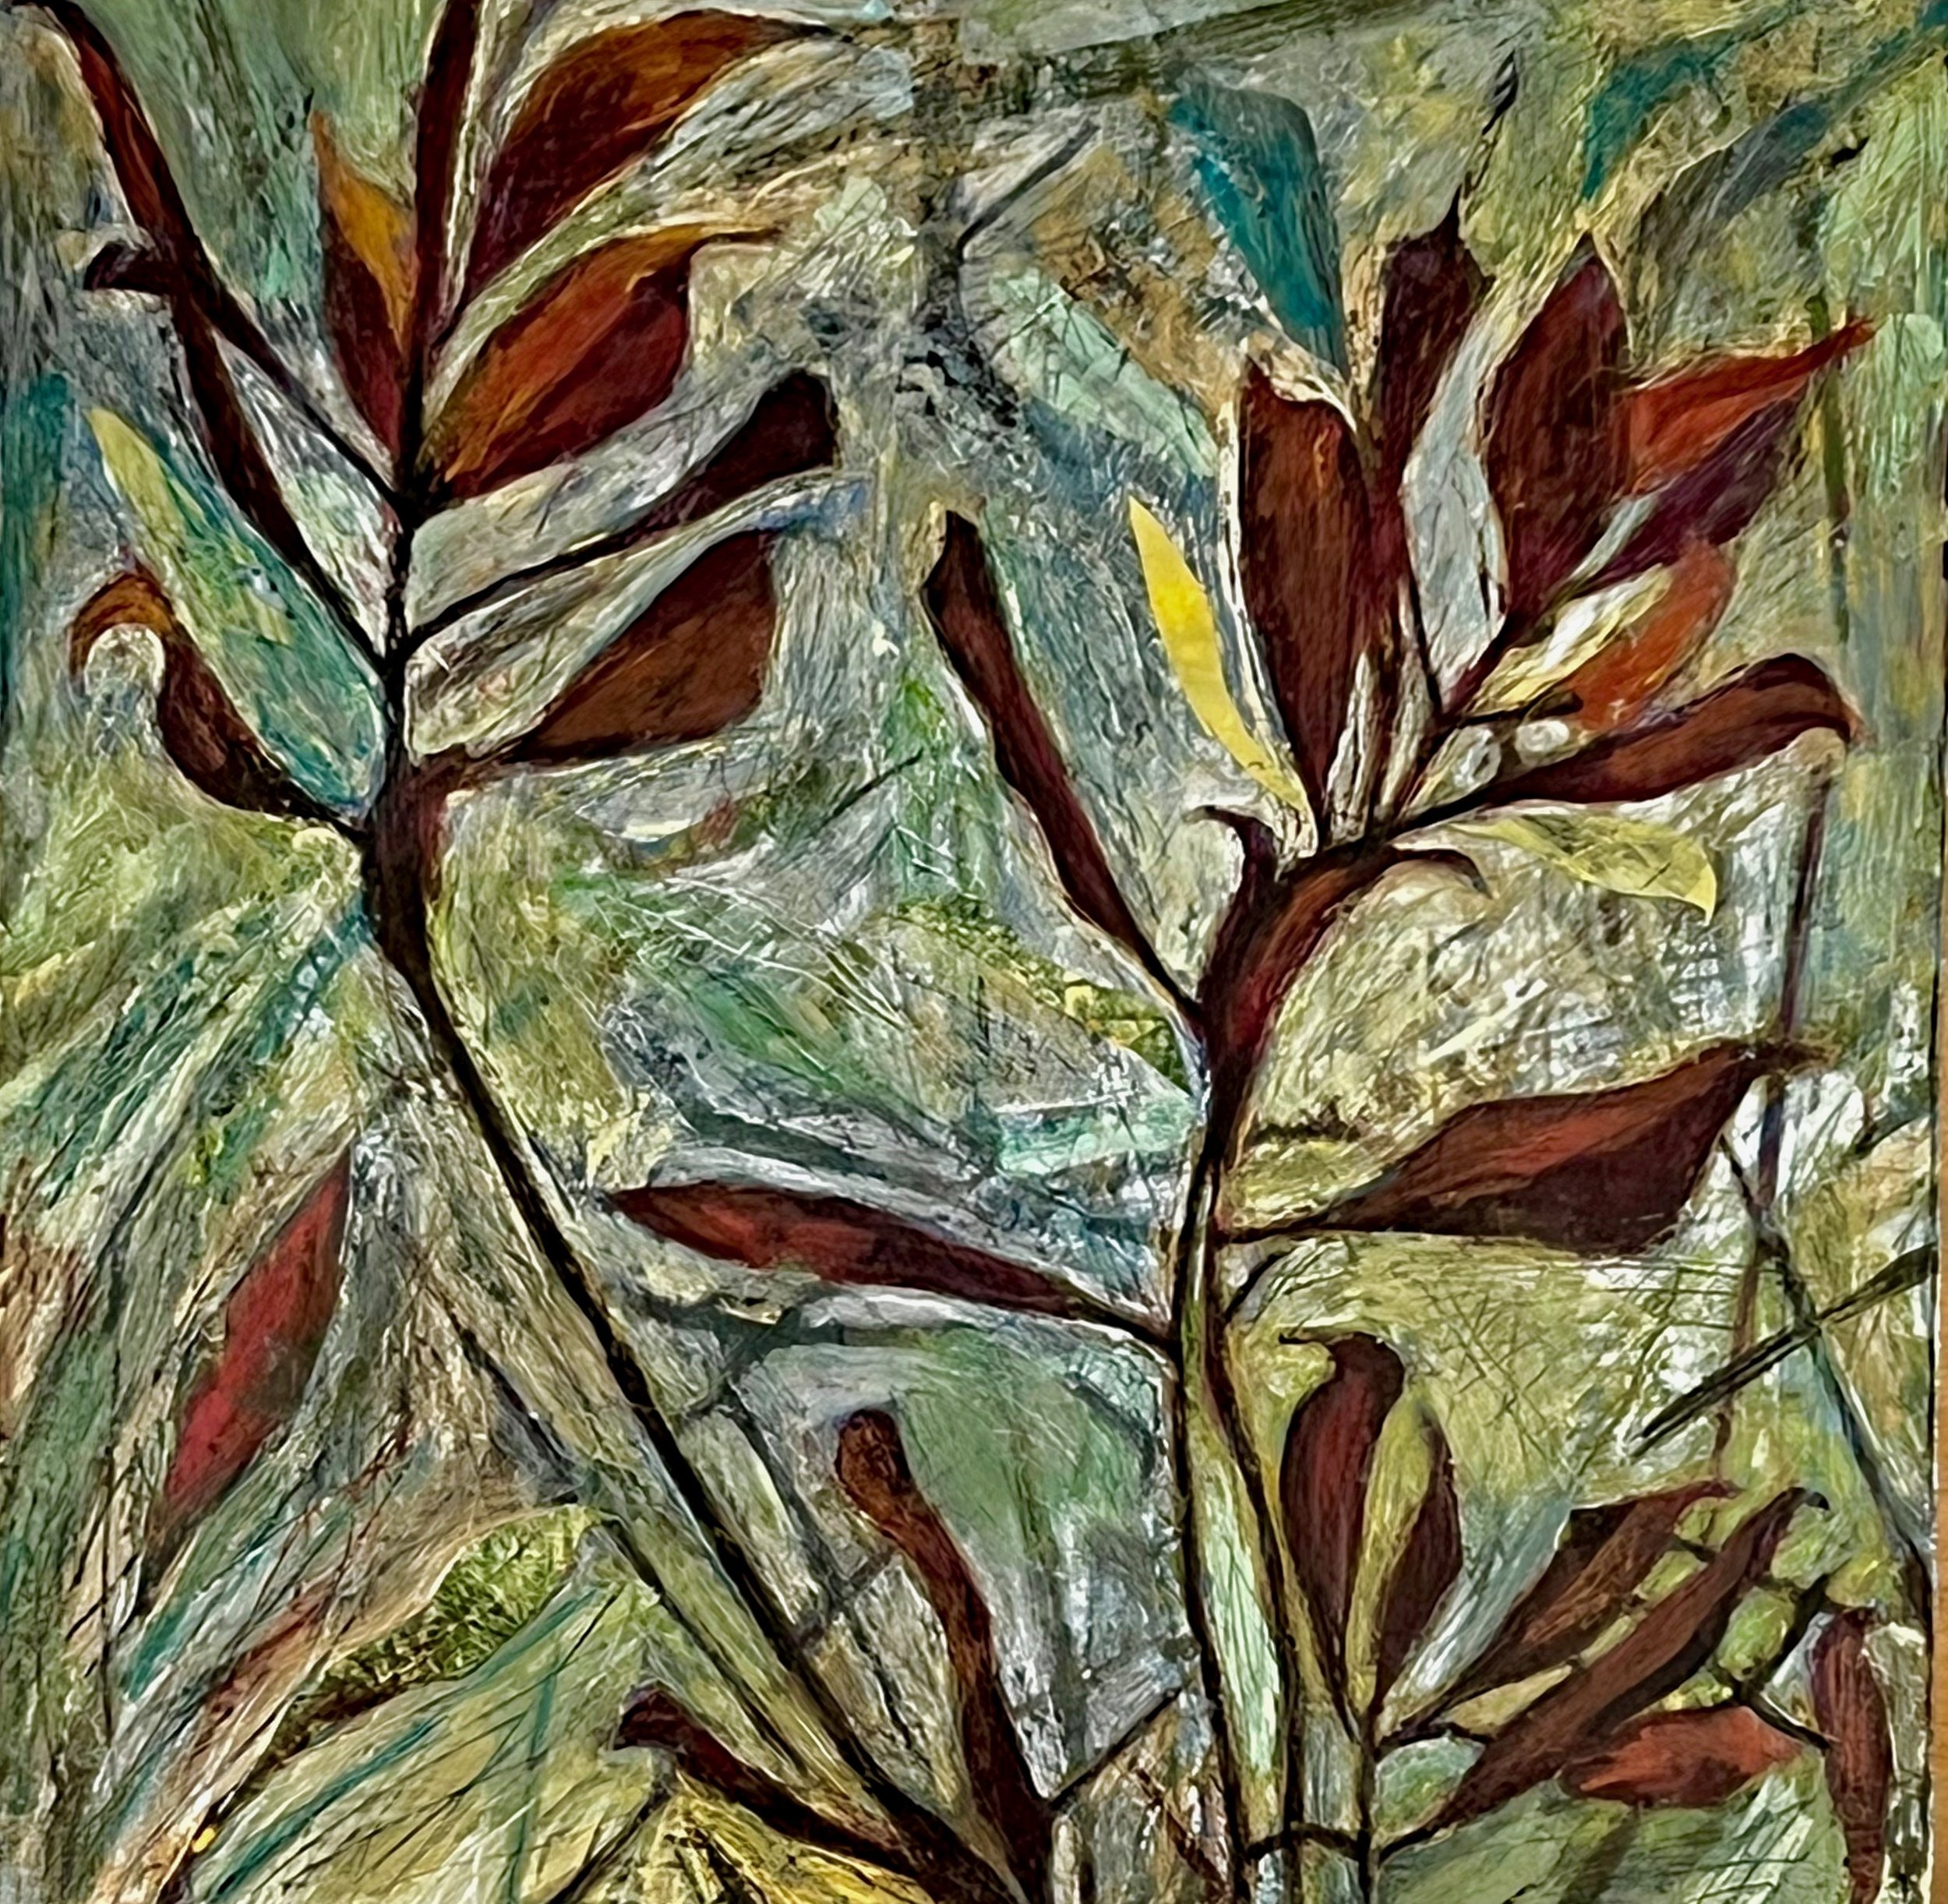 Northern Bayberry (Morella pensylvanica), 2022, acrylic and collage on wood panel, 12x12”, $700